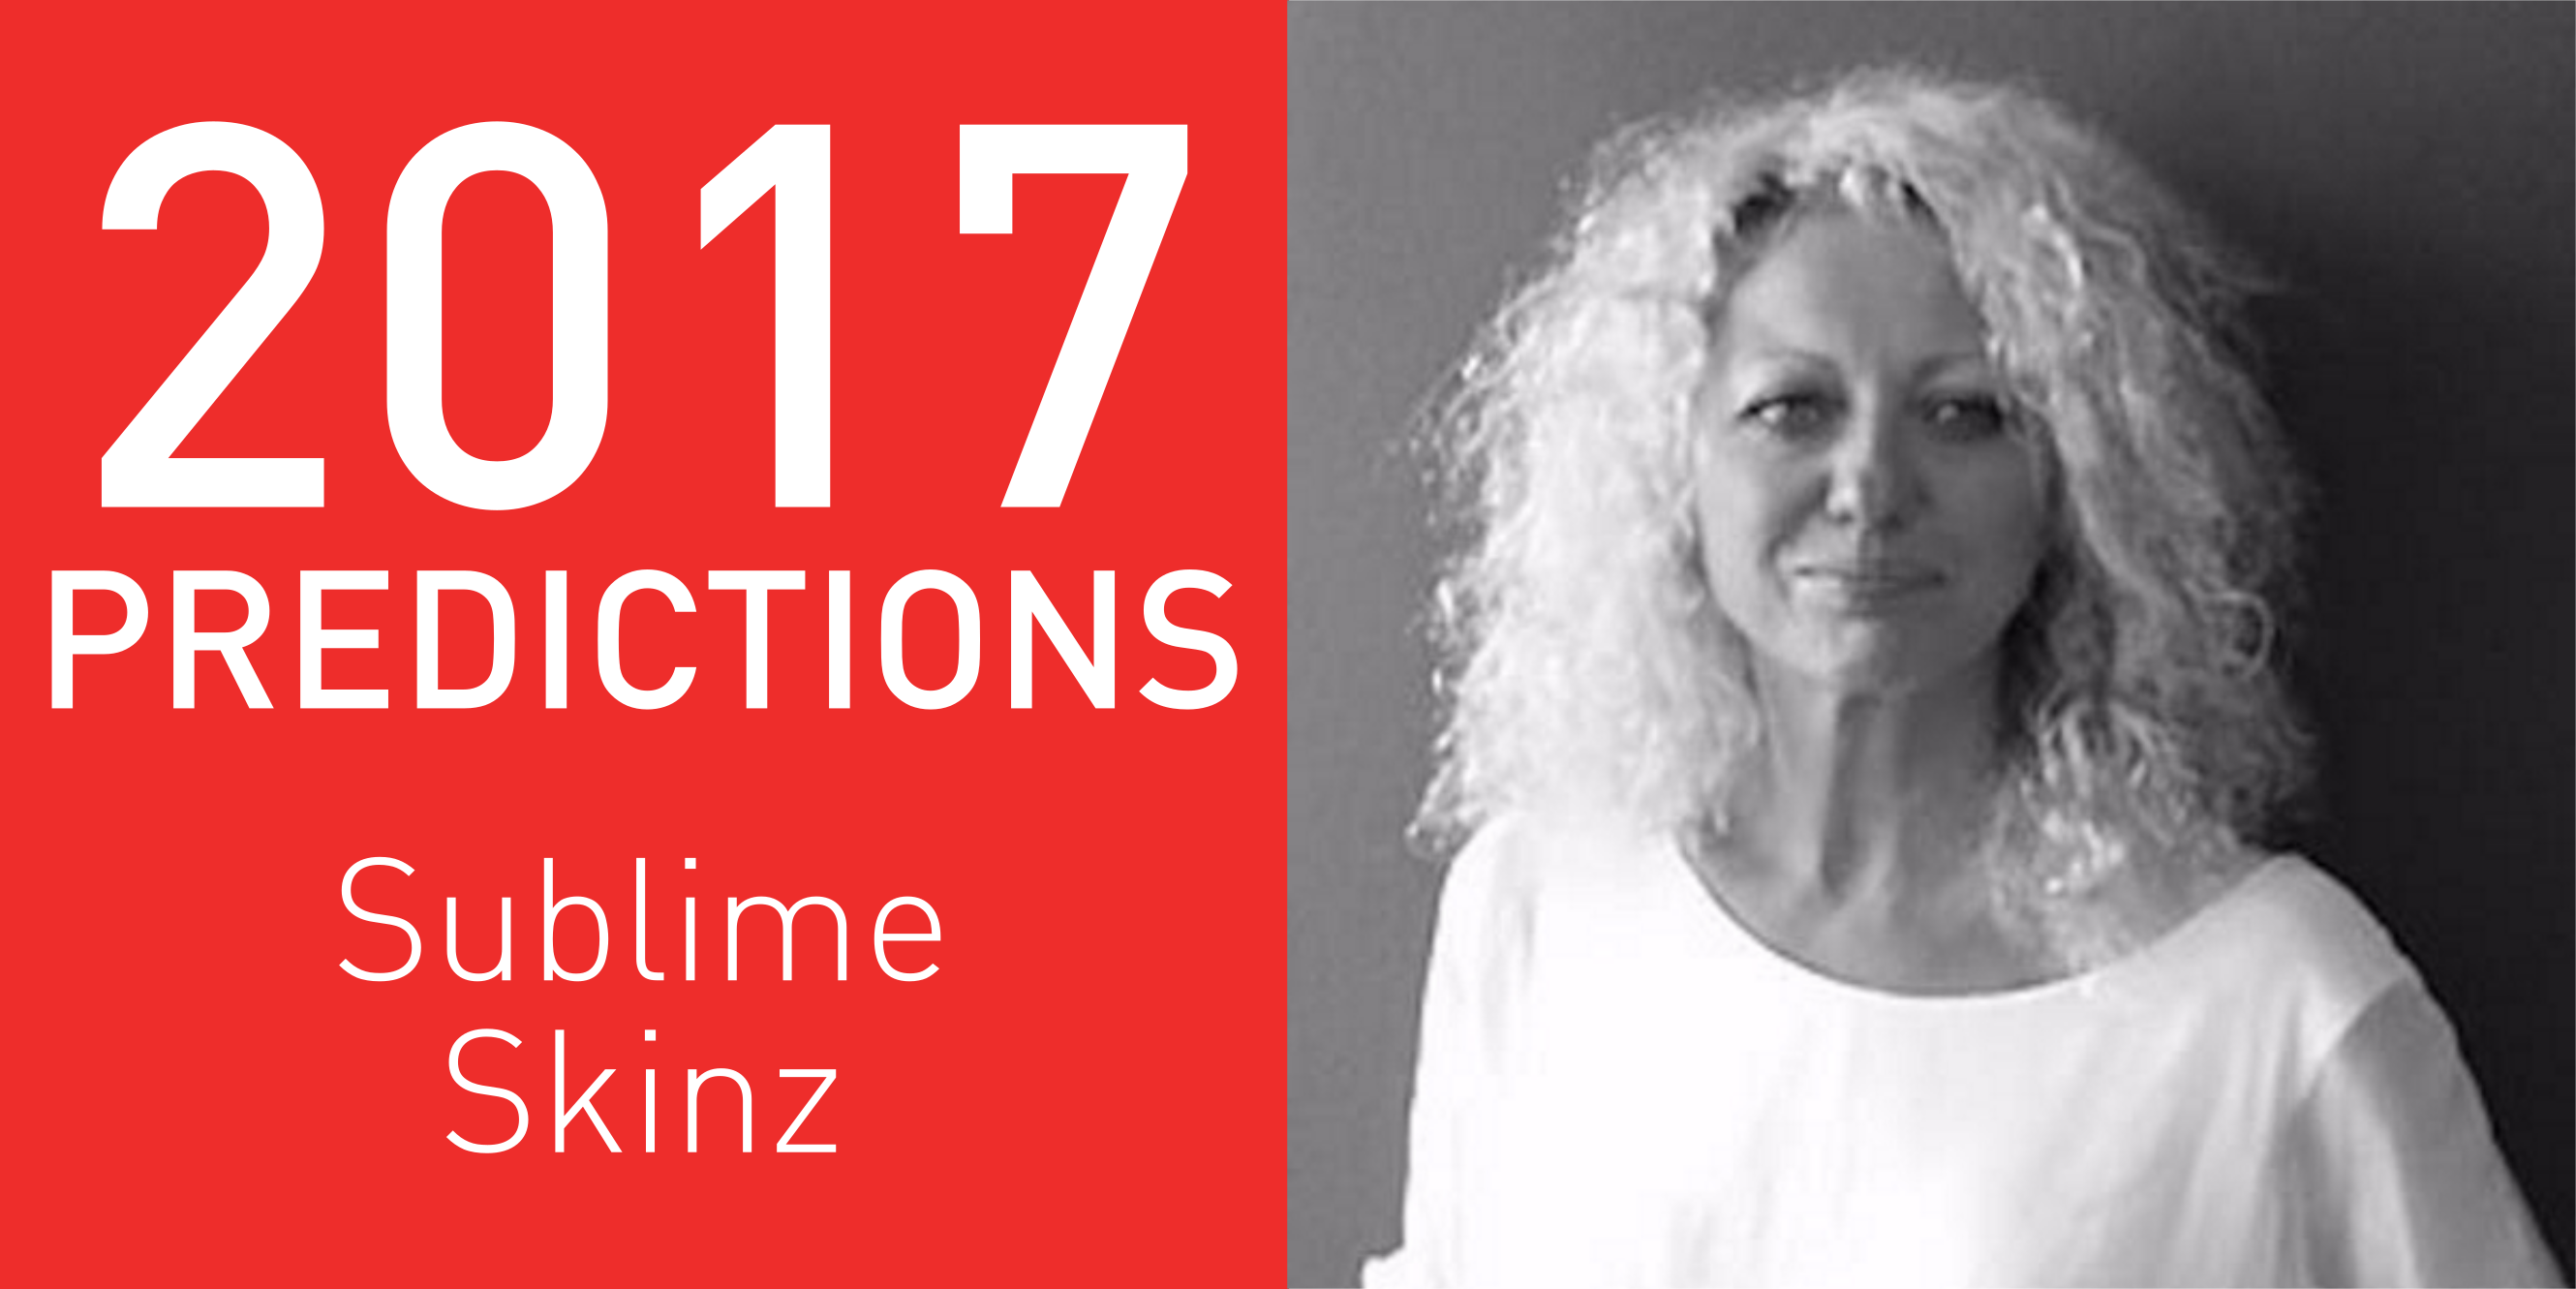 2017 Predictions: Sublime Skinz